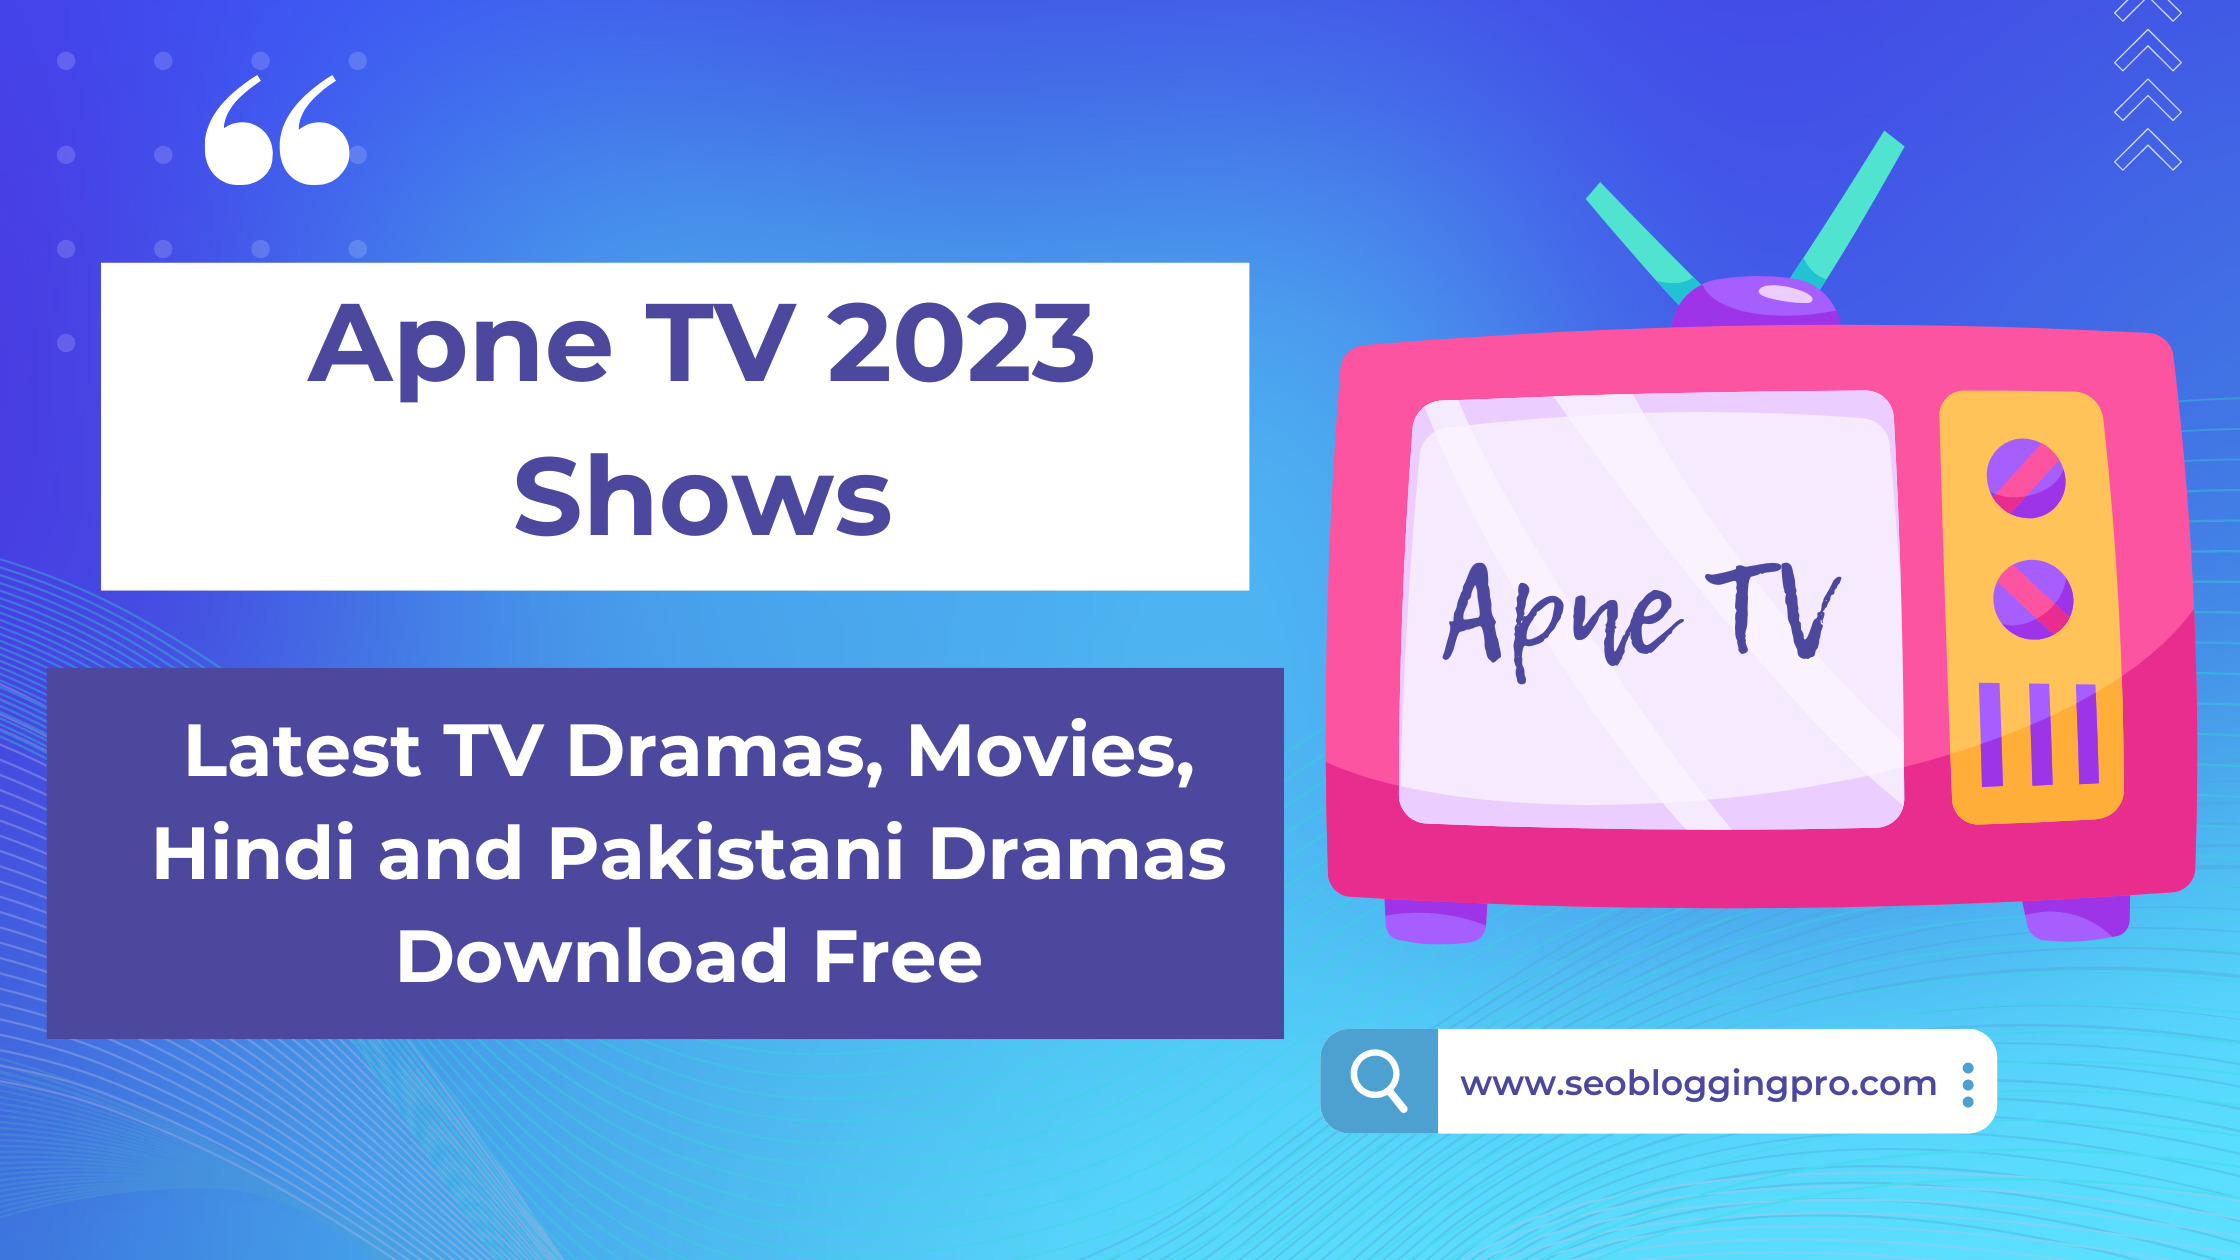 Apne TV 2023 Shows